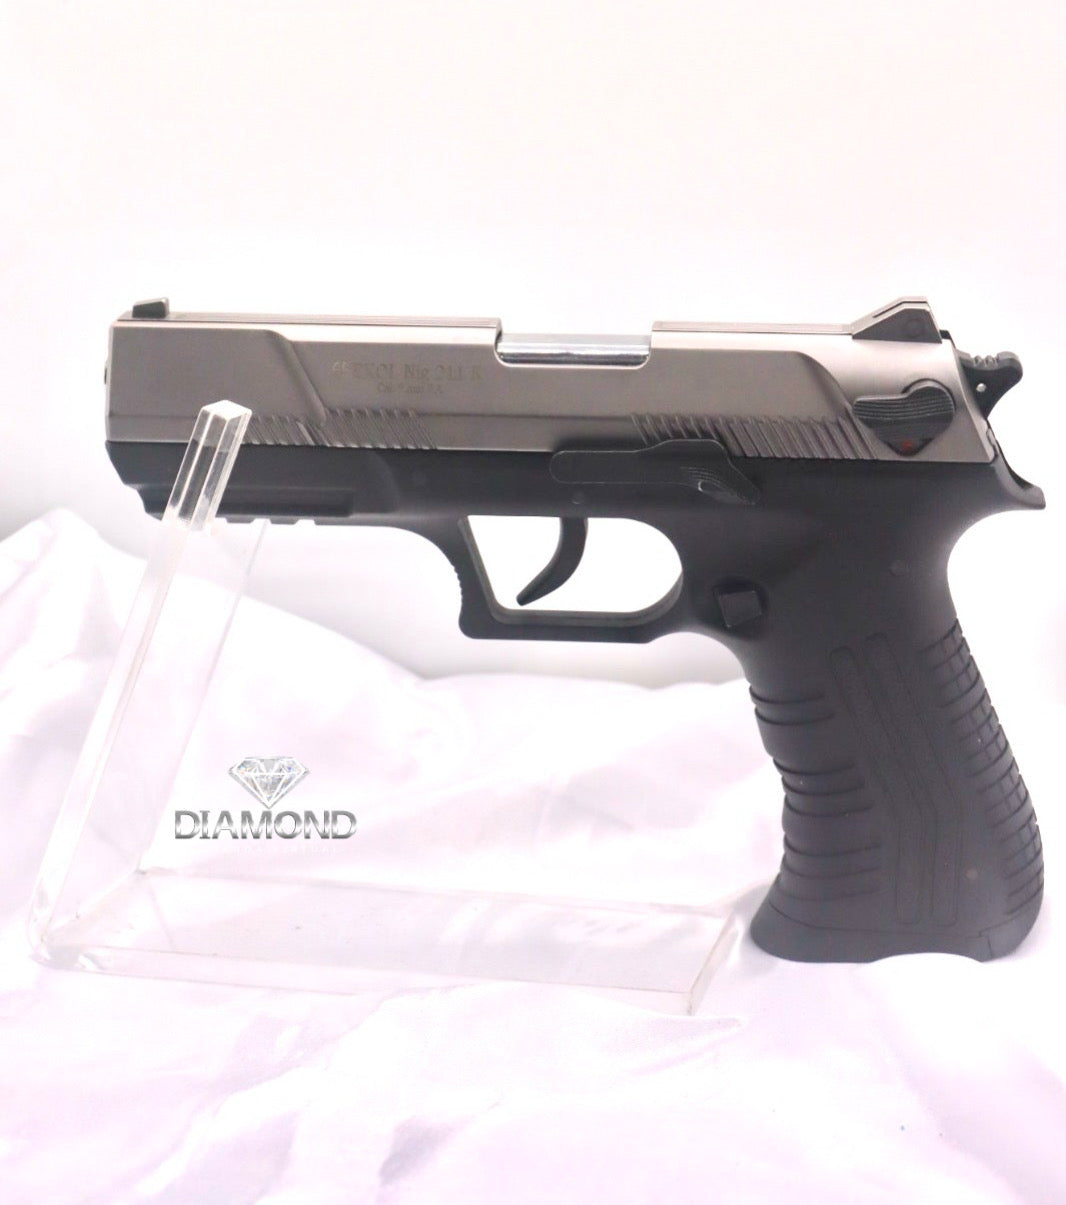 pistola traumatica ekol firat compact – tienda diamond 18k